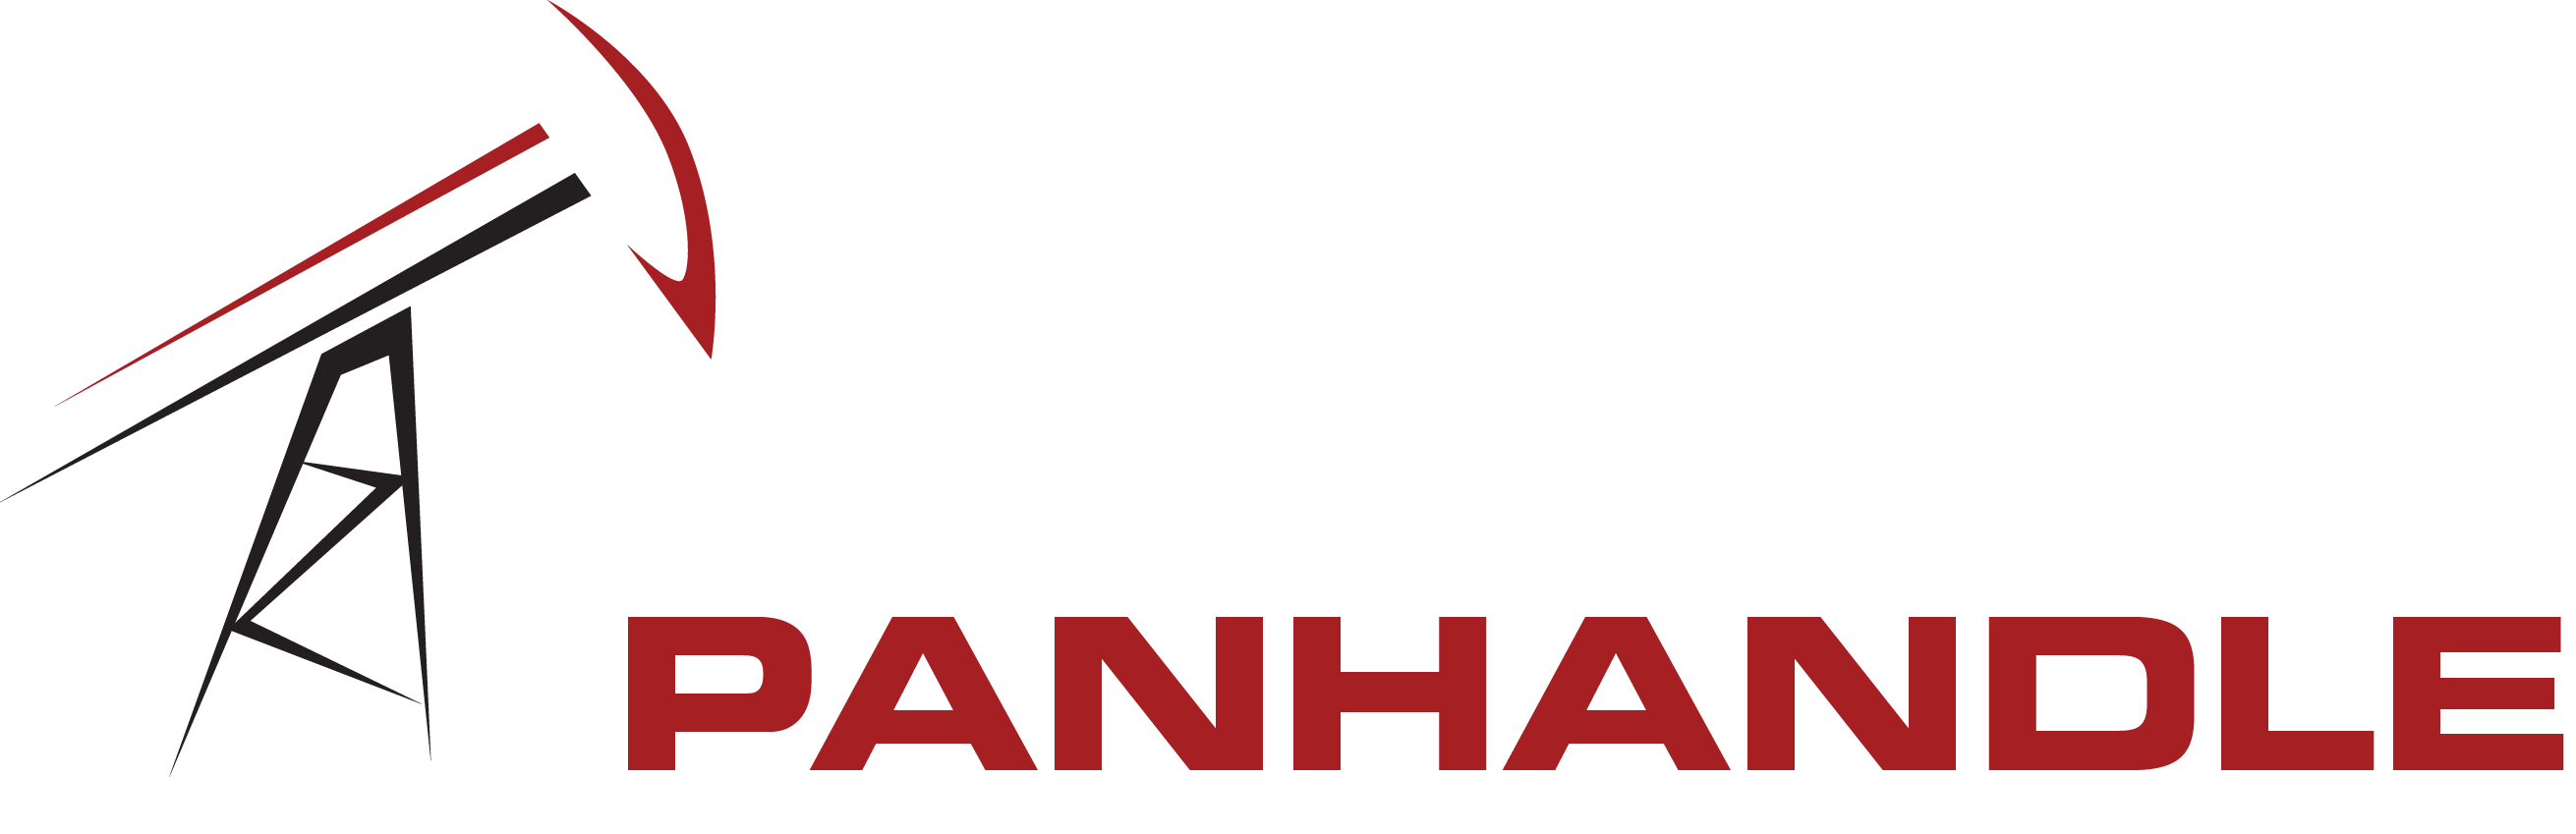 Panhandle Oilfield Services, Inc.